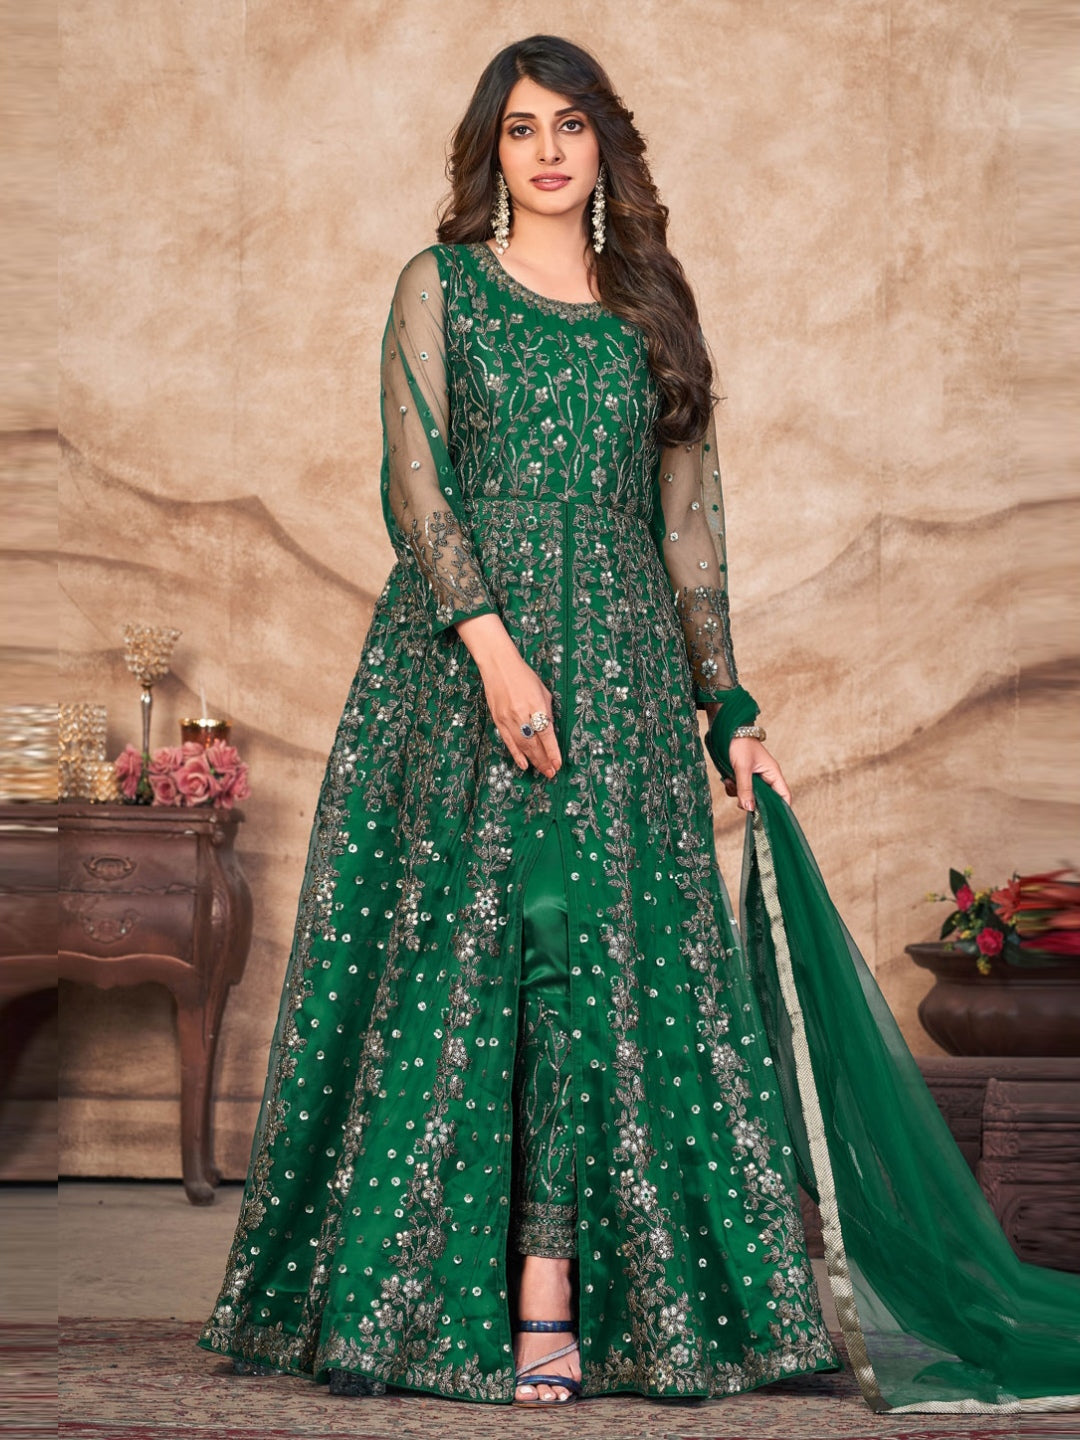 Engagement Wear Anarkali Gown | Bridal Sangeet Marriage Fusion Fashion